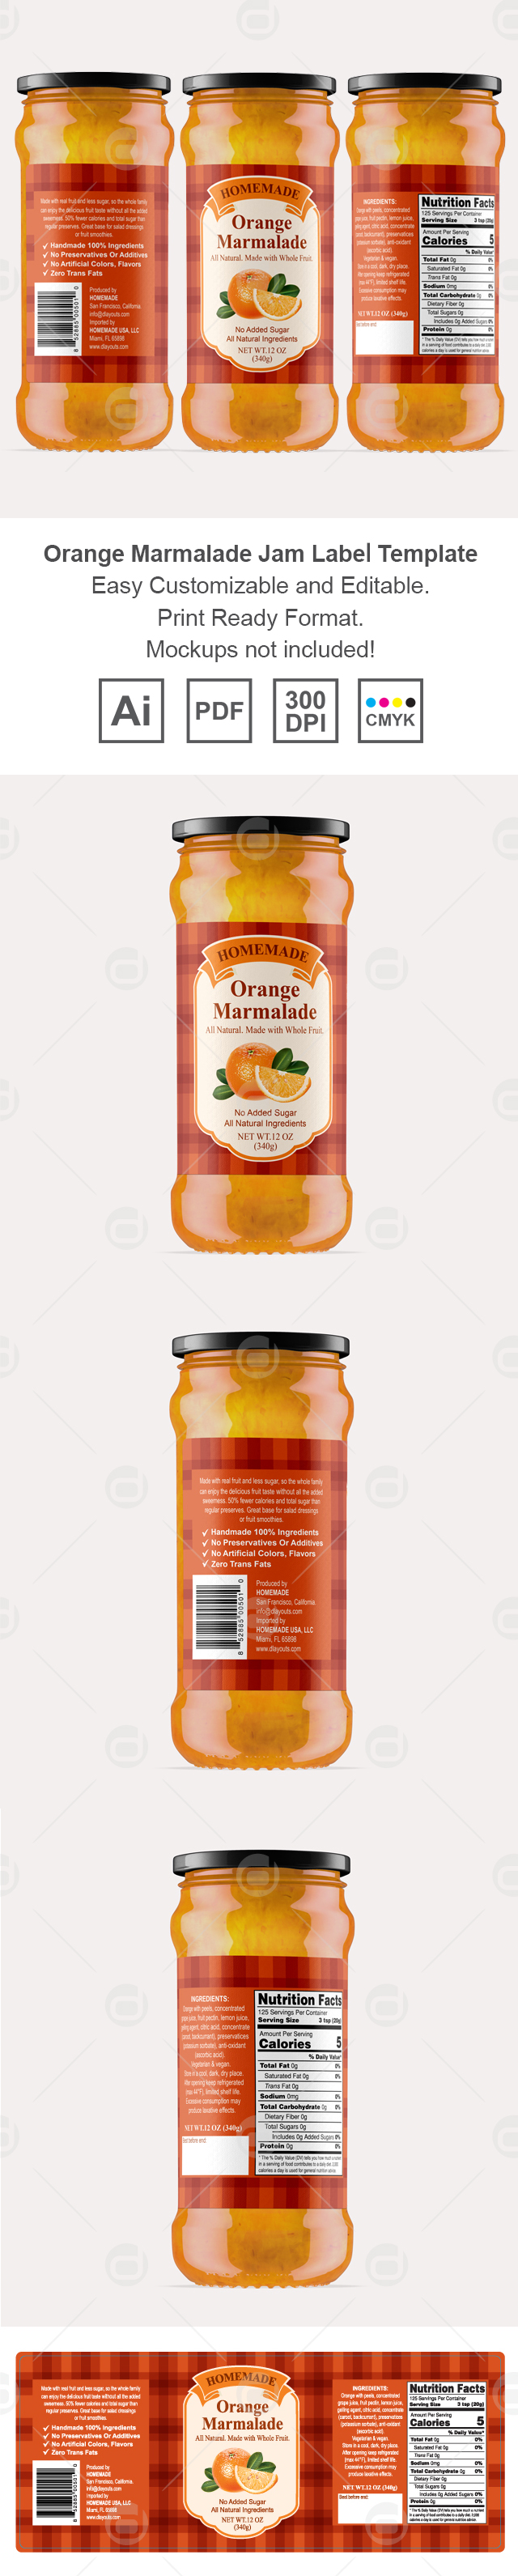 Orange Marmalade Jam Label Template